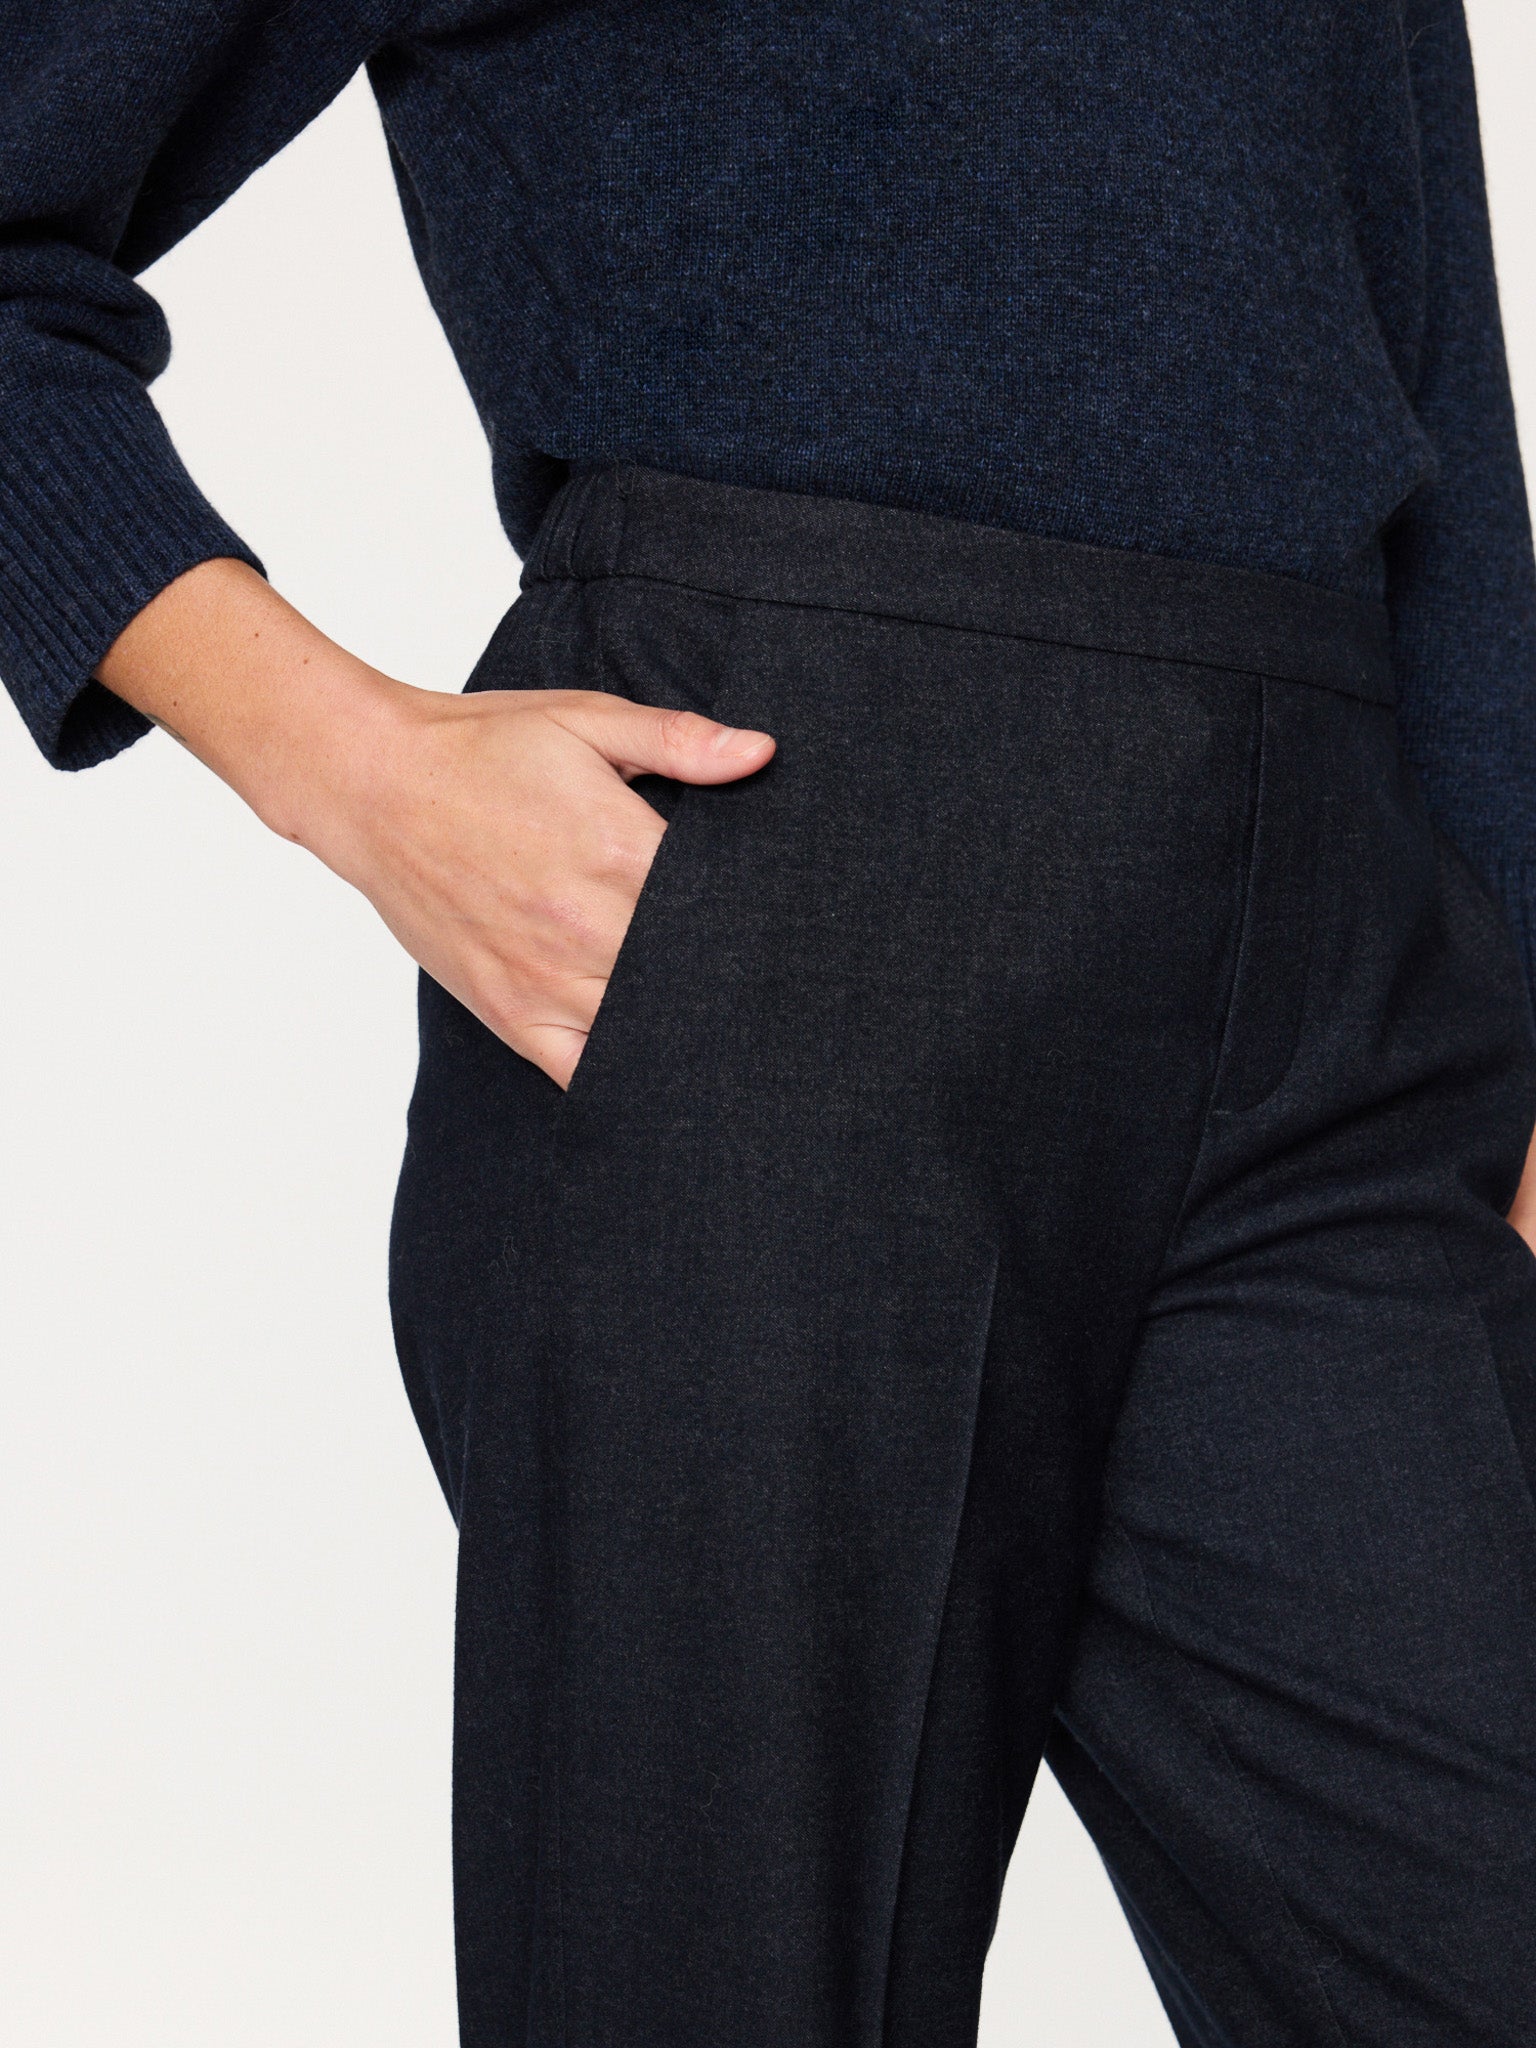 Mayra Women's Navy Blue Cotton Formal Trouser